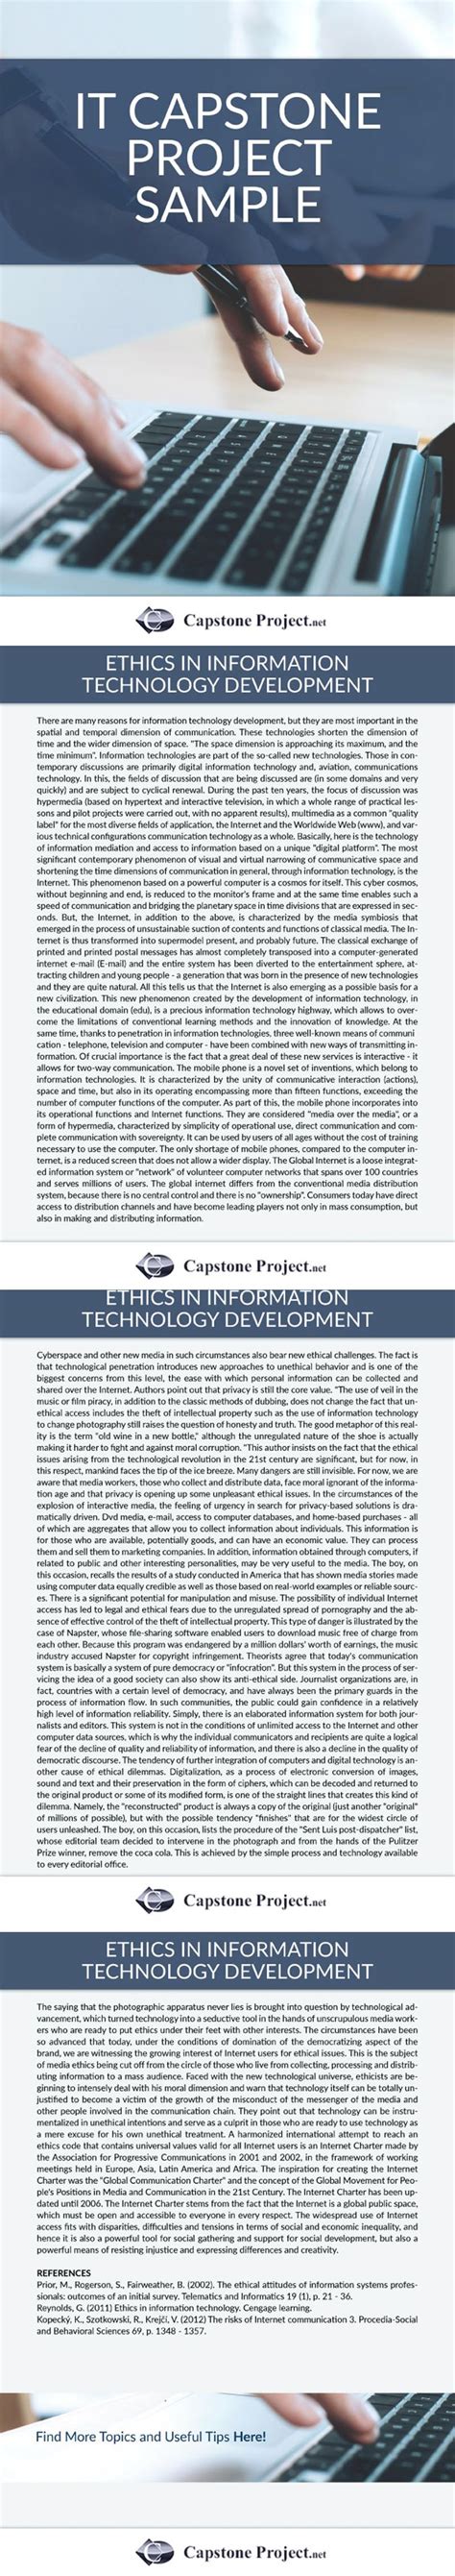 capstone project sample   link httpswww